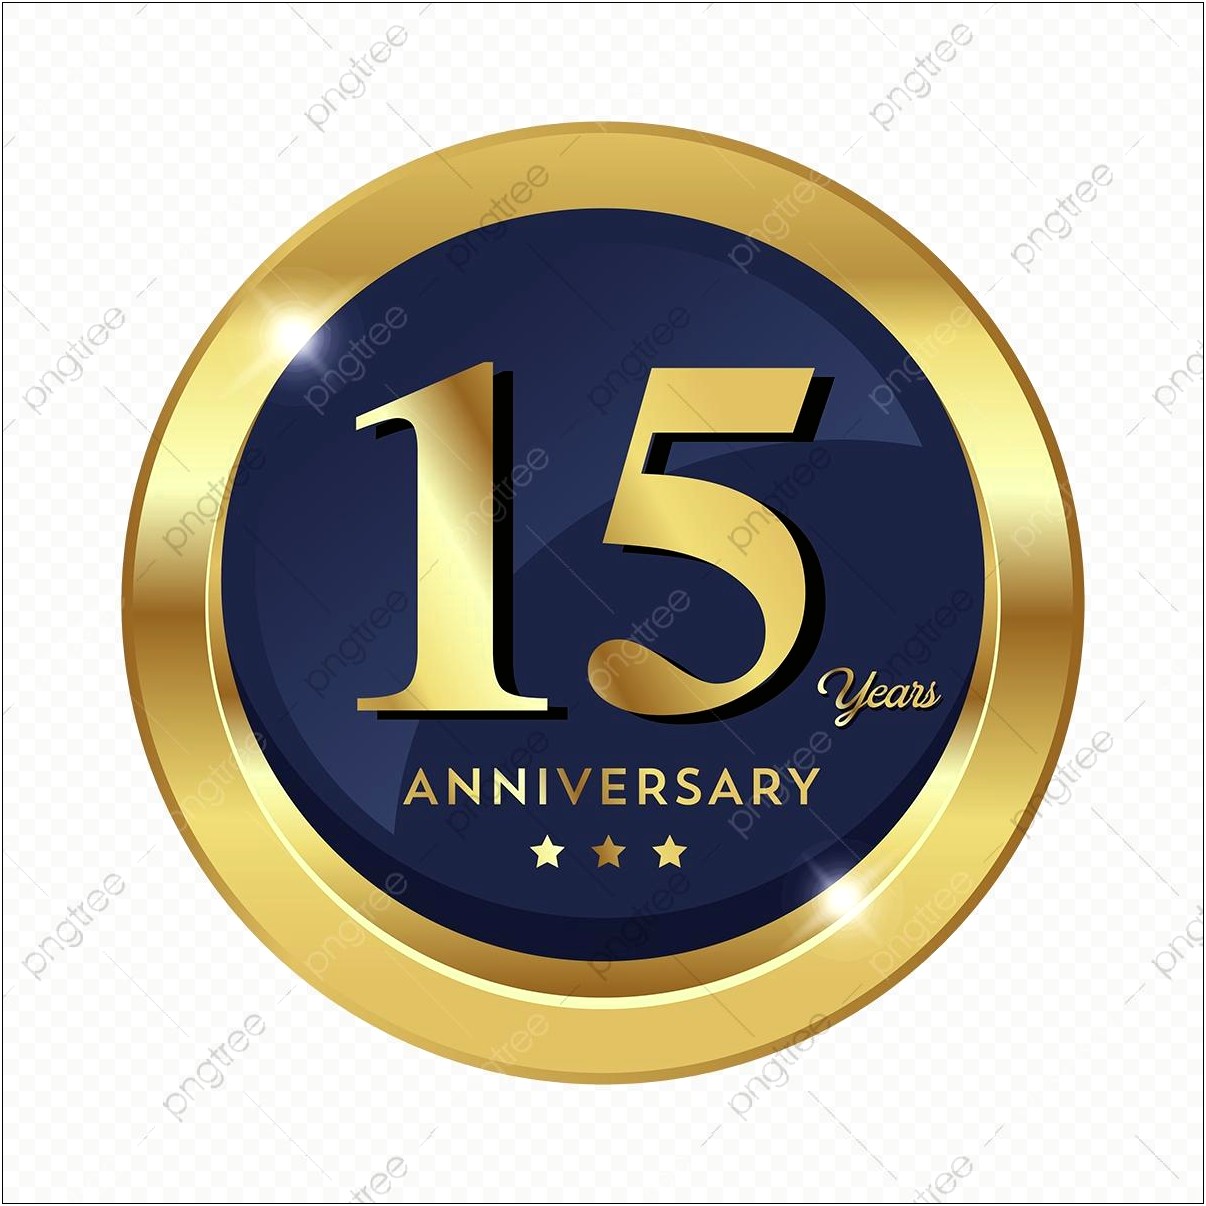 15th Anniversary Logo Adobe Illustrator Template Free